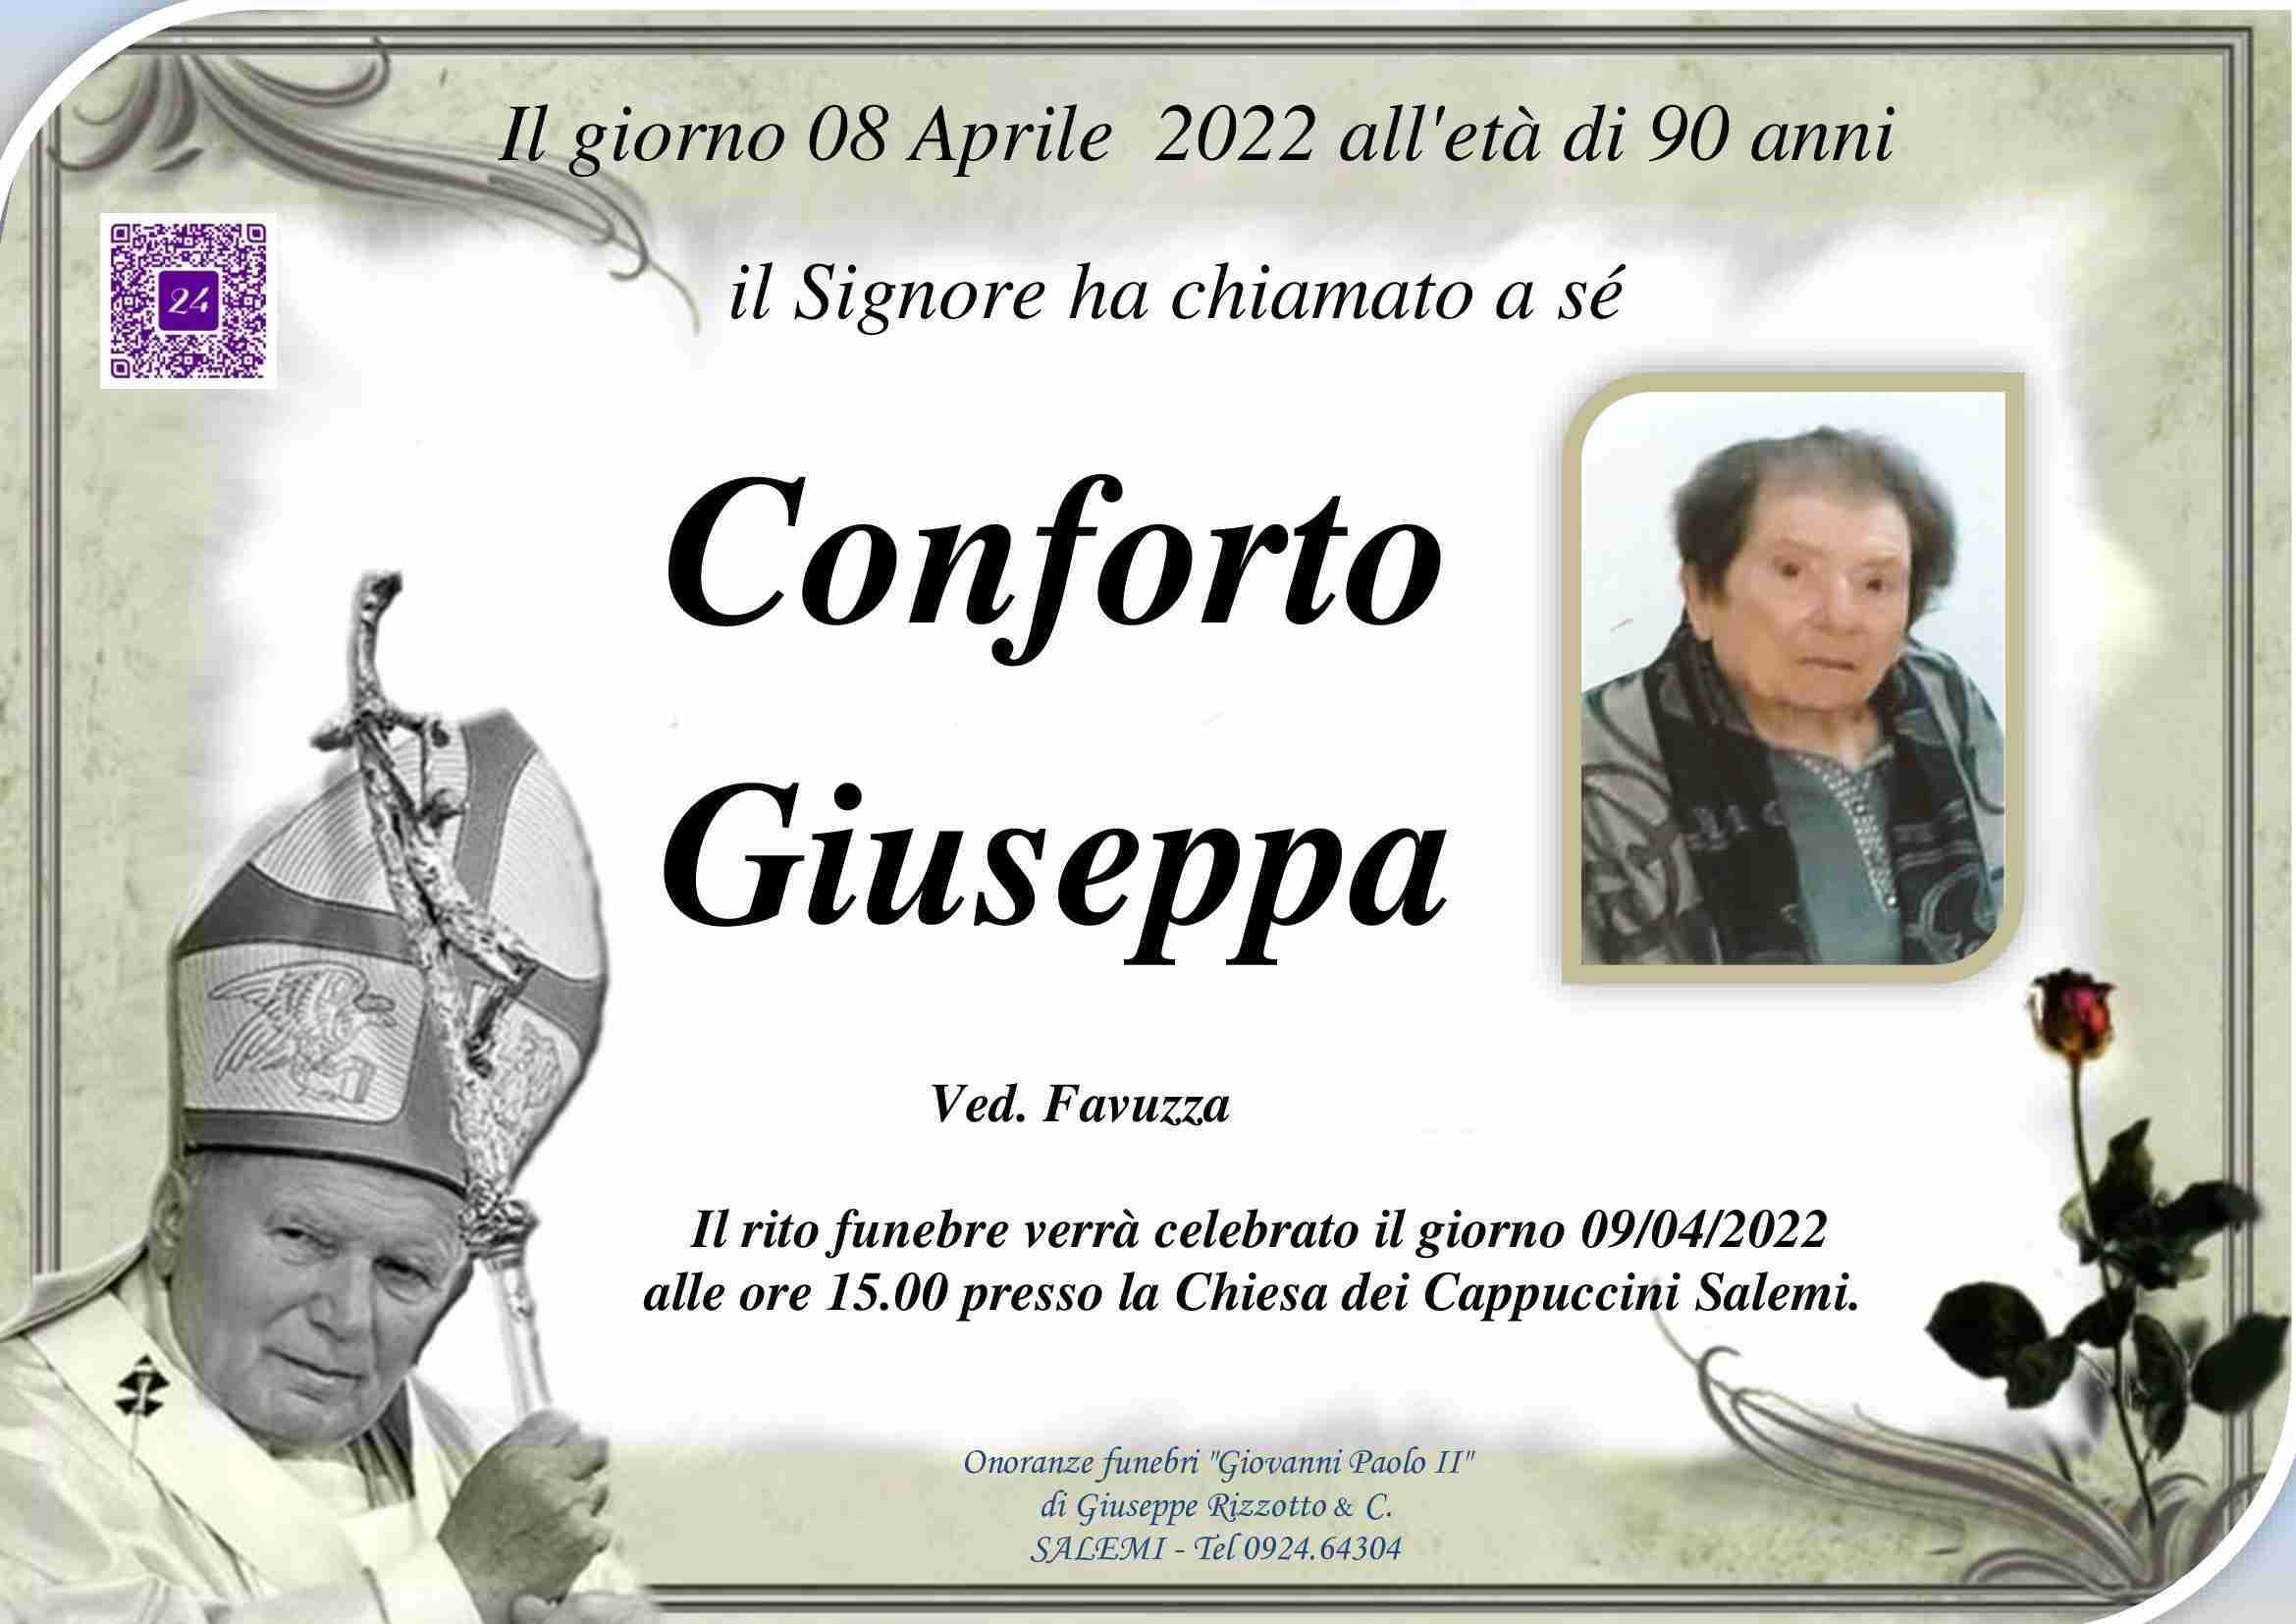 Giuseppa Conforto